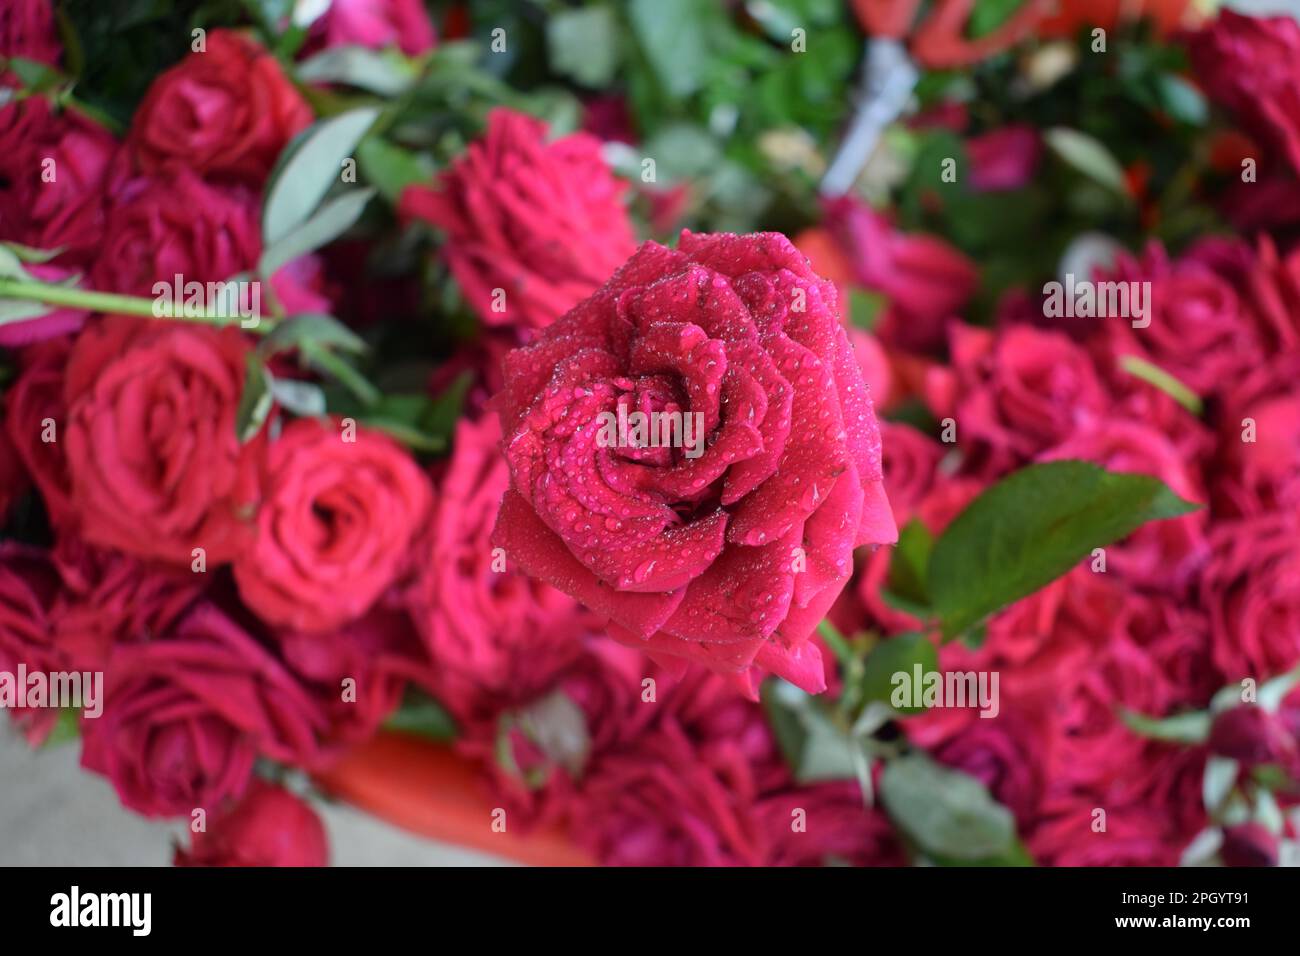 'Beauty in Bloom: A Captivating Rose in Full Splendor' Stock Photo